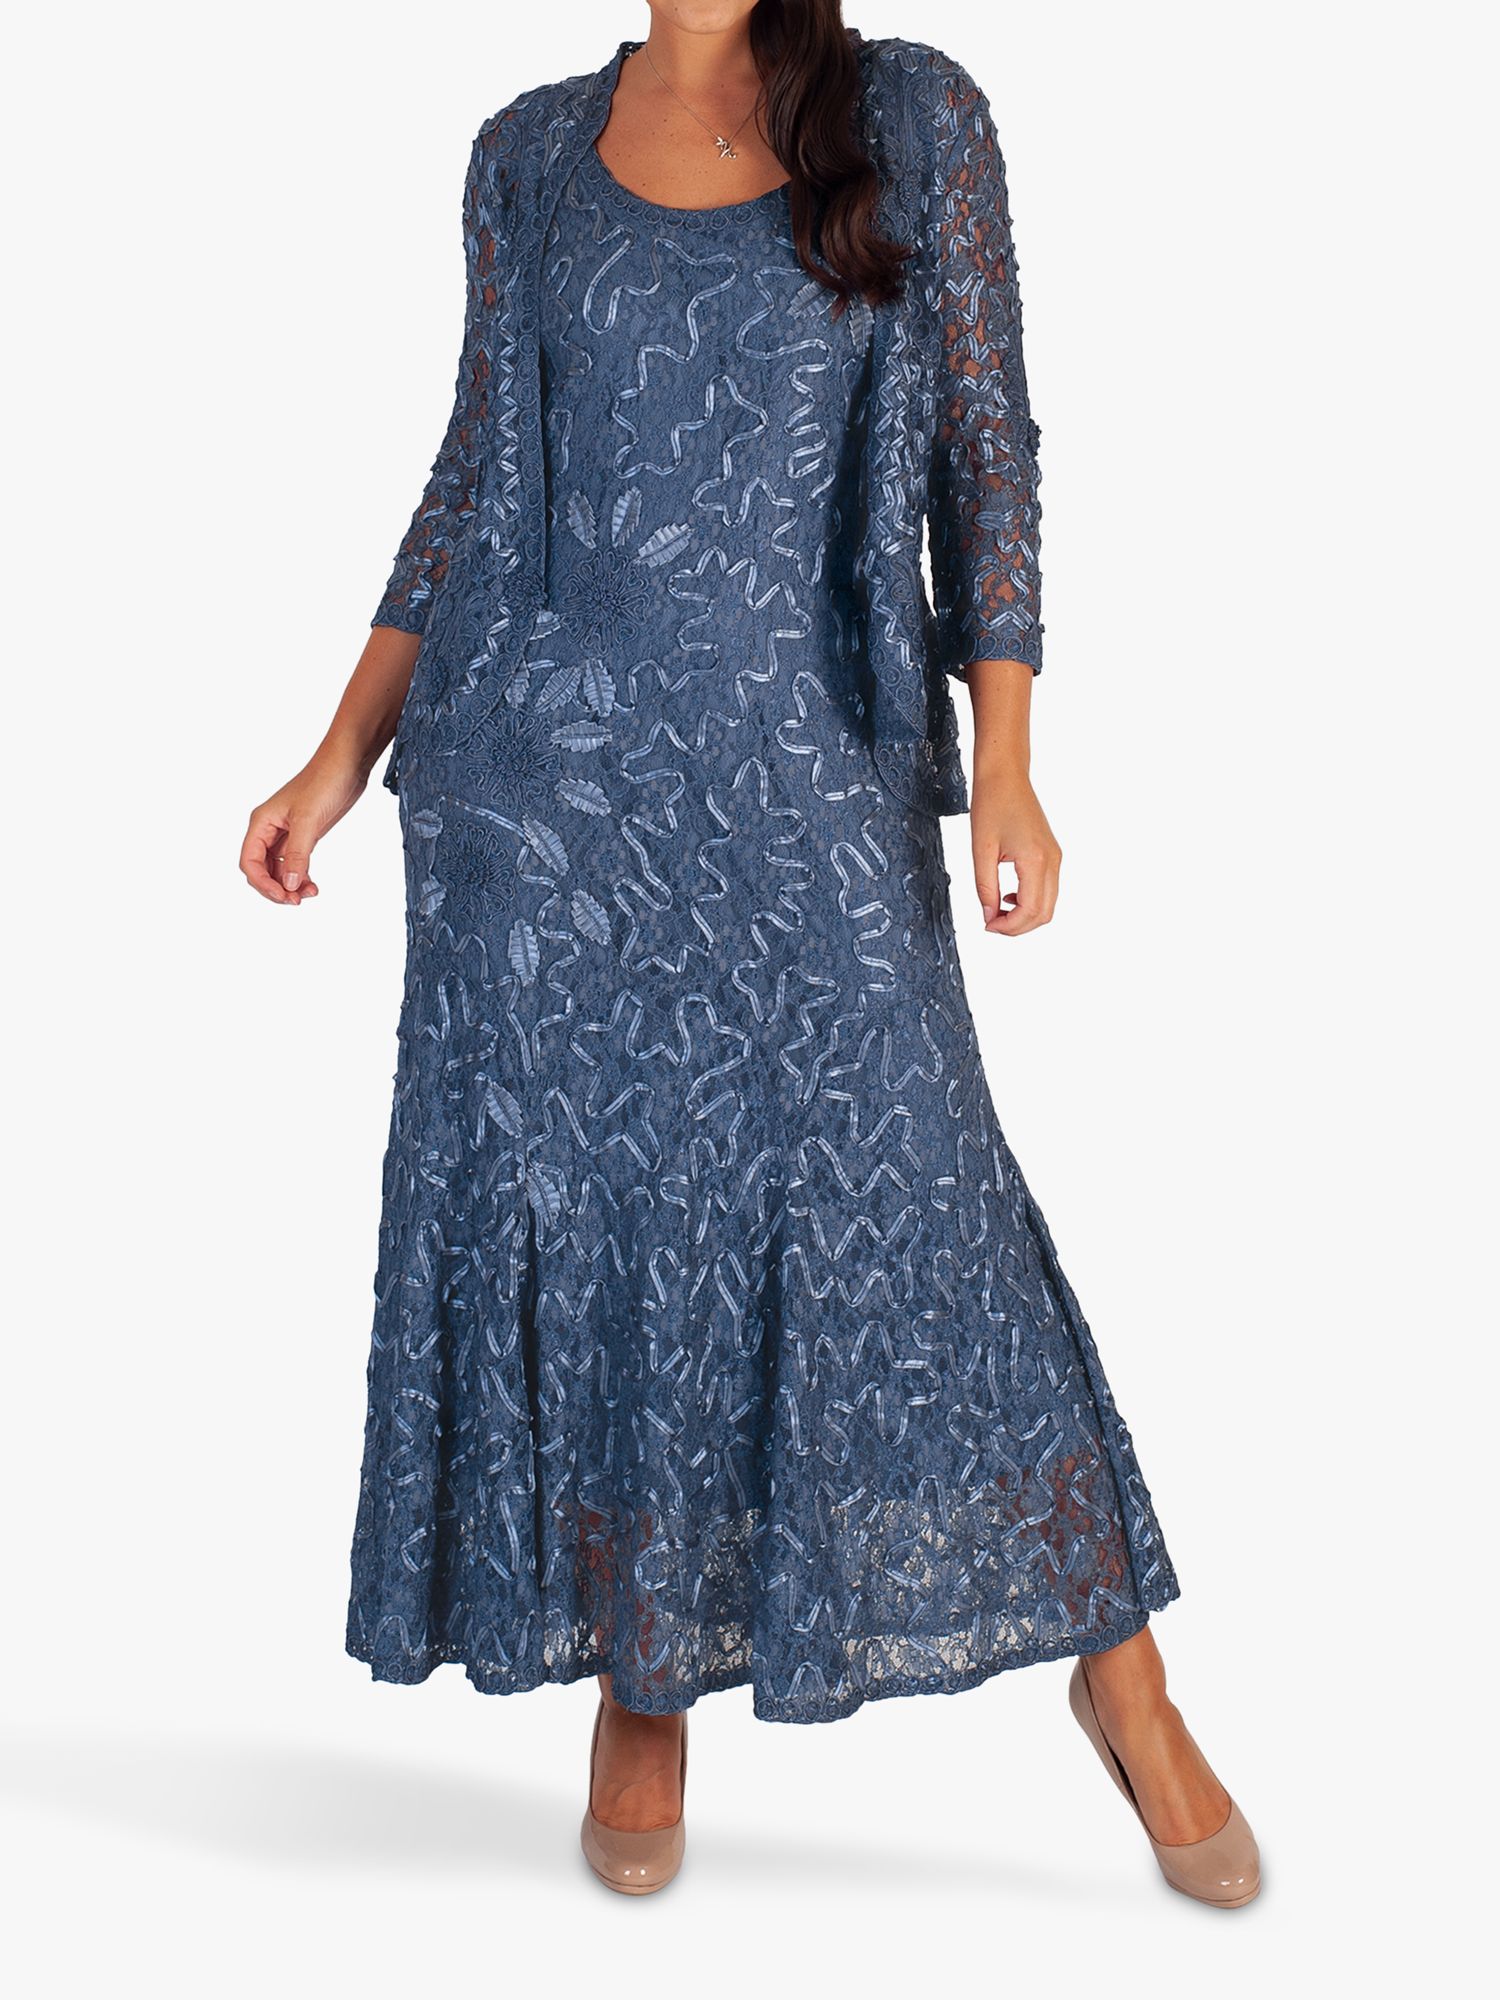 Chesca Lace Cornelli Dress, Bluebird at John Lewis & Partners